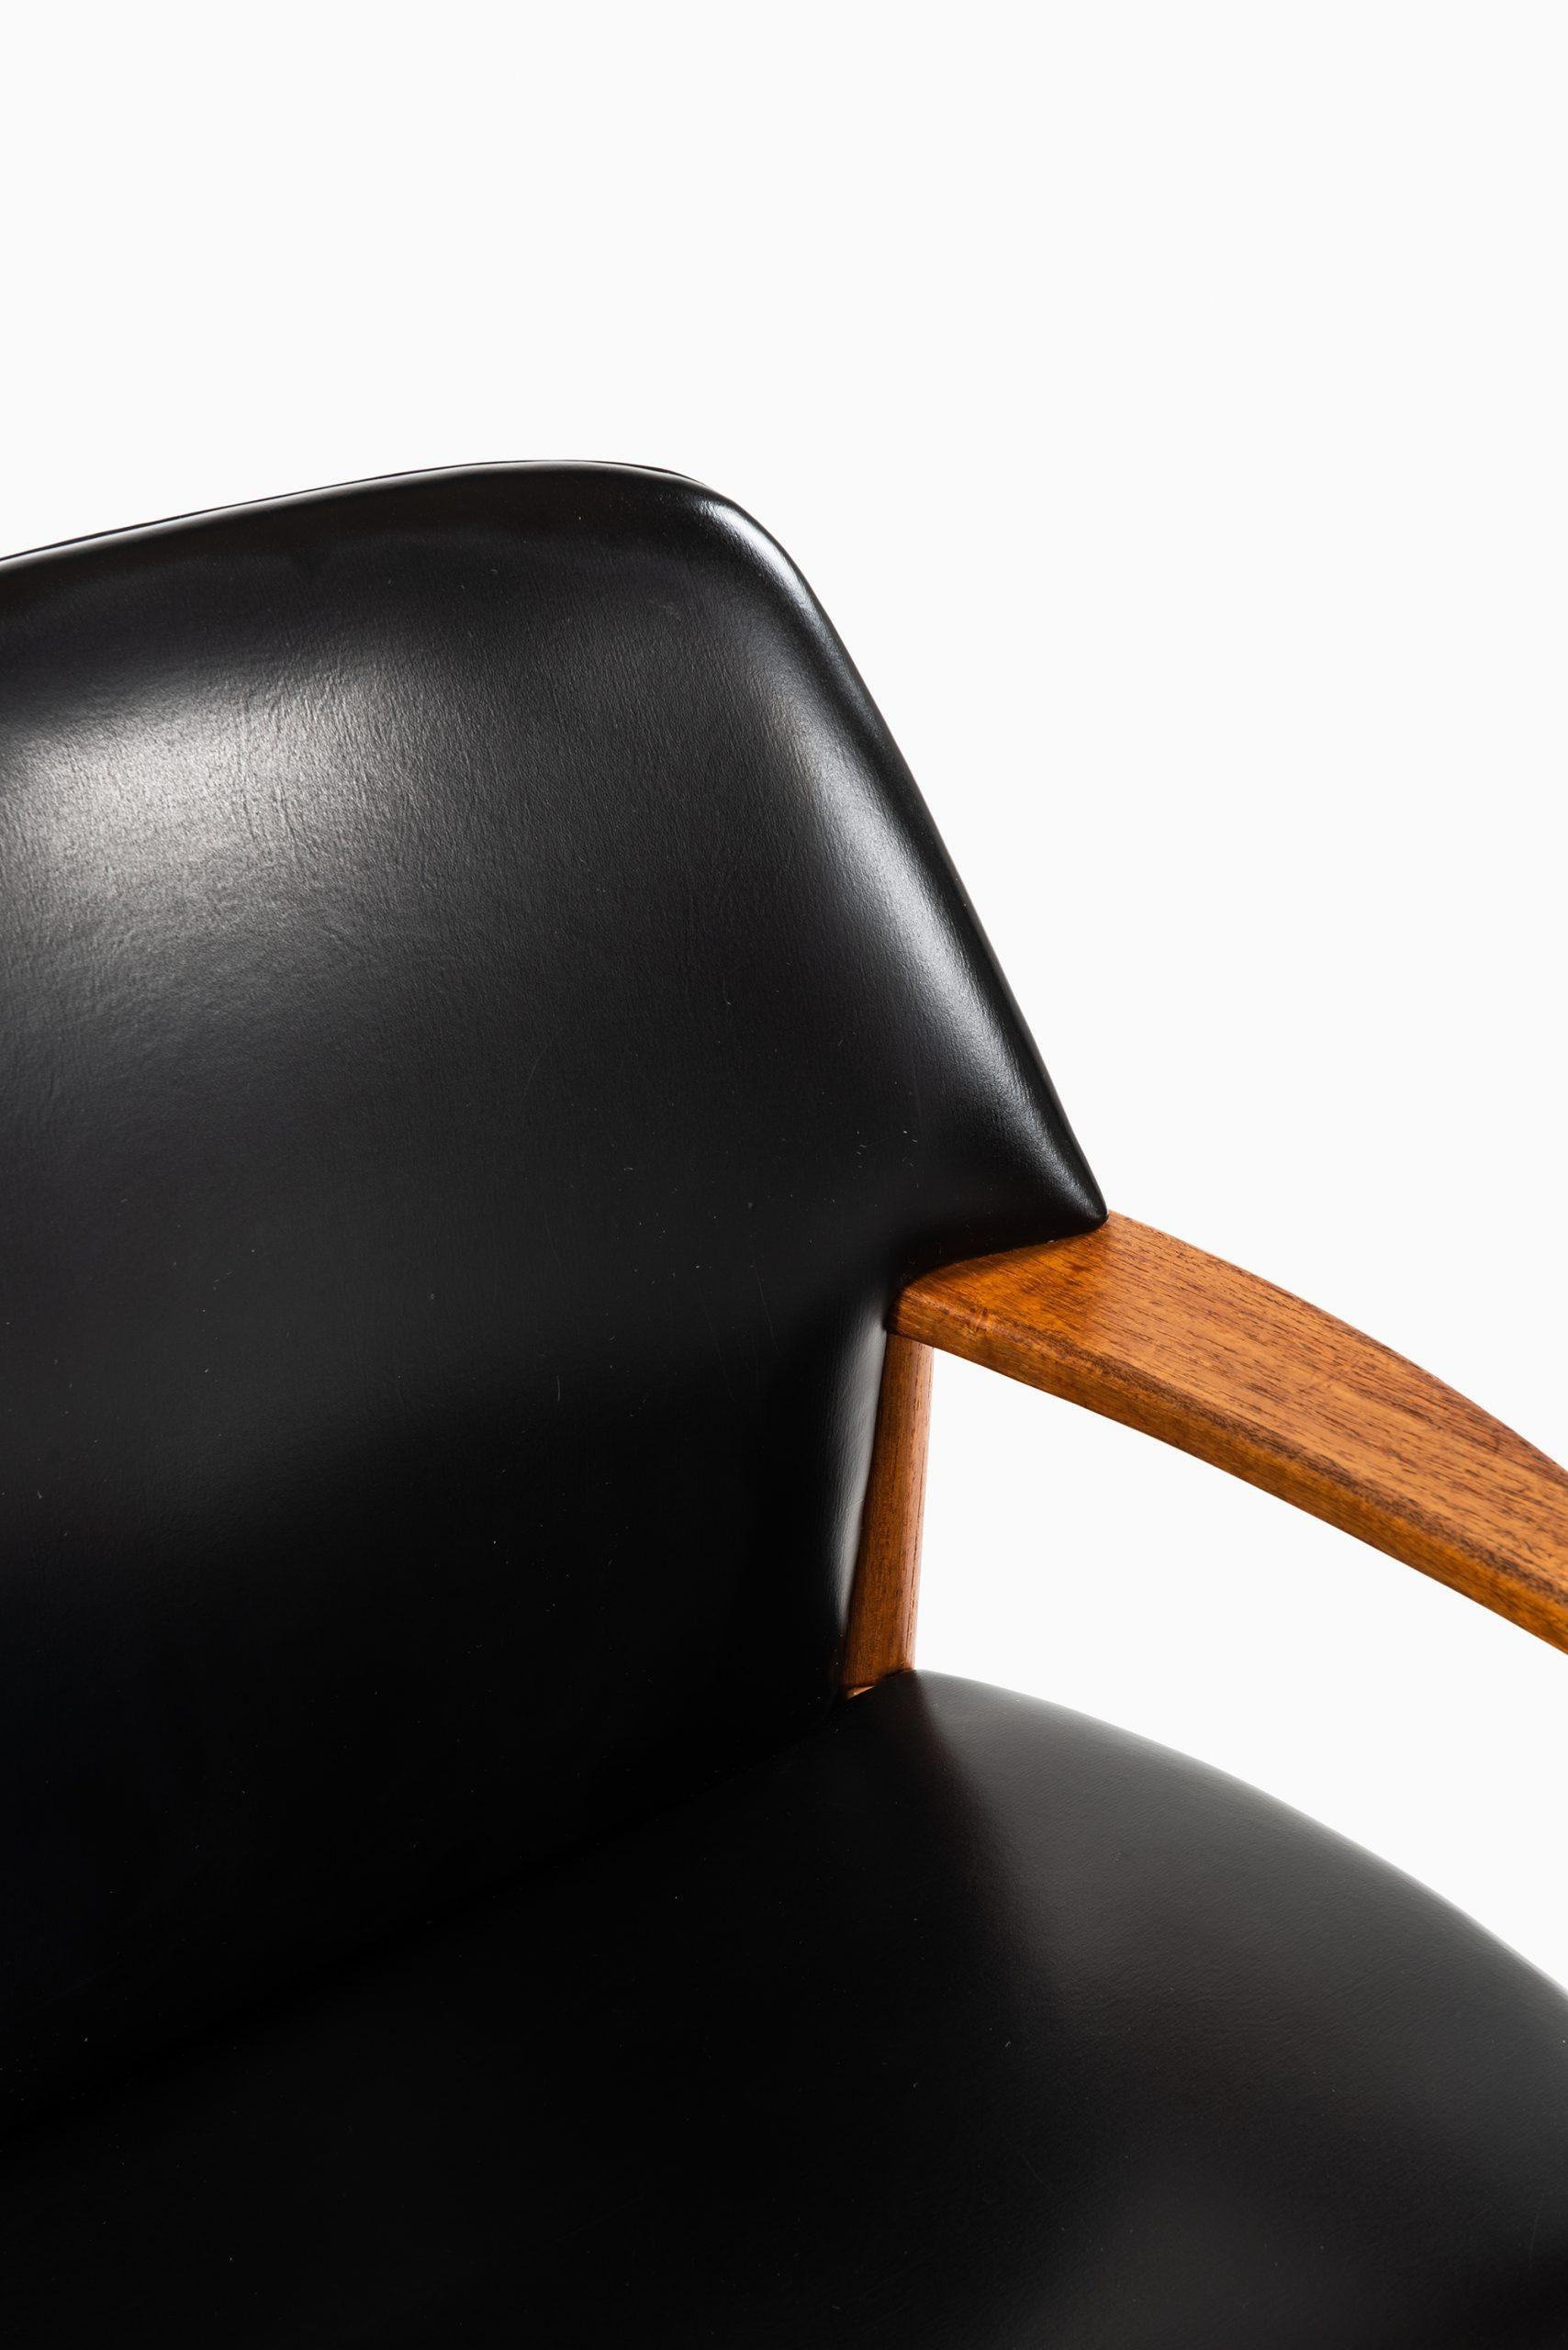 Rare pair of armchairs designed by Aksel Bender Madsen & Ejner Larsen. Produced by Fritz Hansen in Denmark.